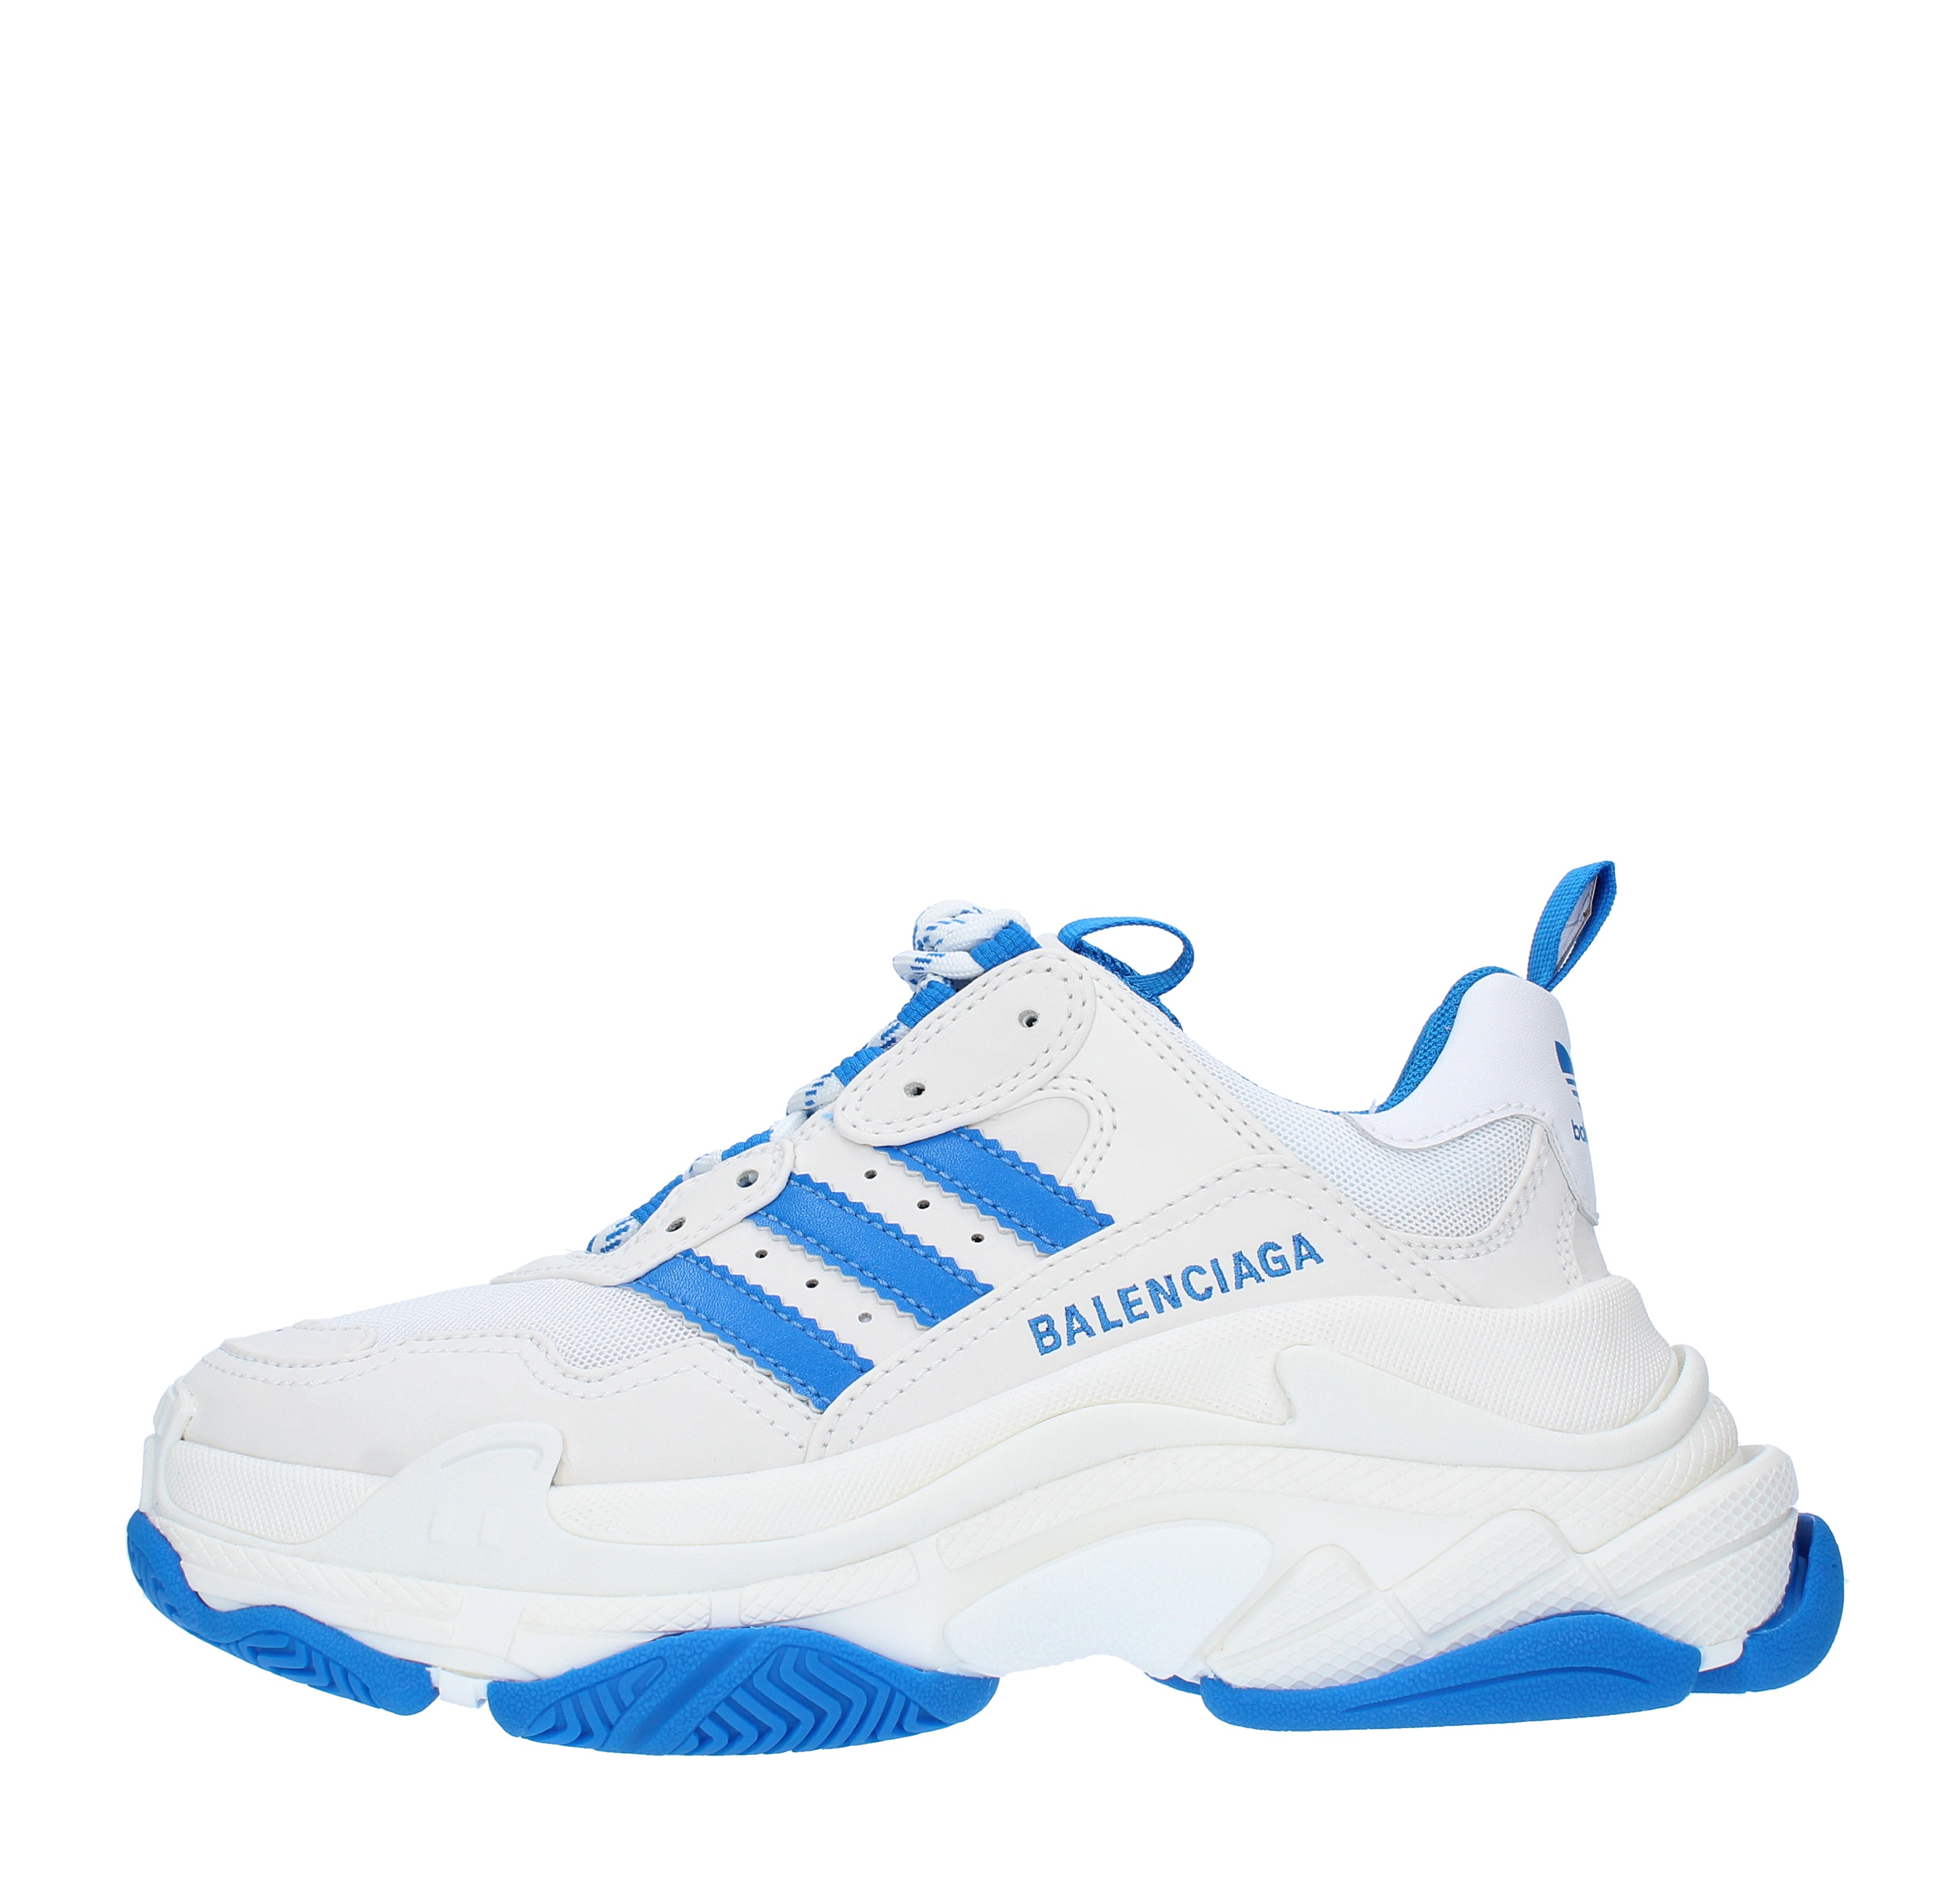 Sneakers BALENCIAGA X ADIDAS TRIPLE S in doppia schiuma e mesh bianco e  azzurro - BALENCIAGA X ADIDAS - Ginevra calzature